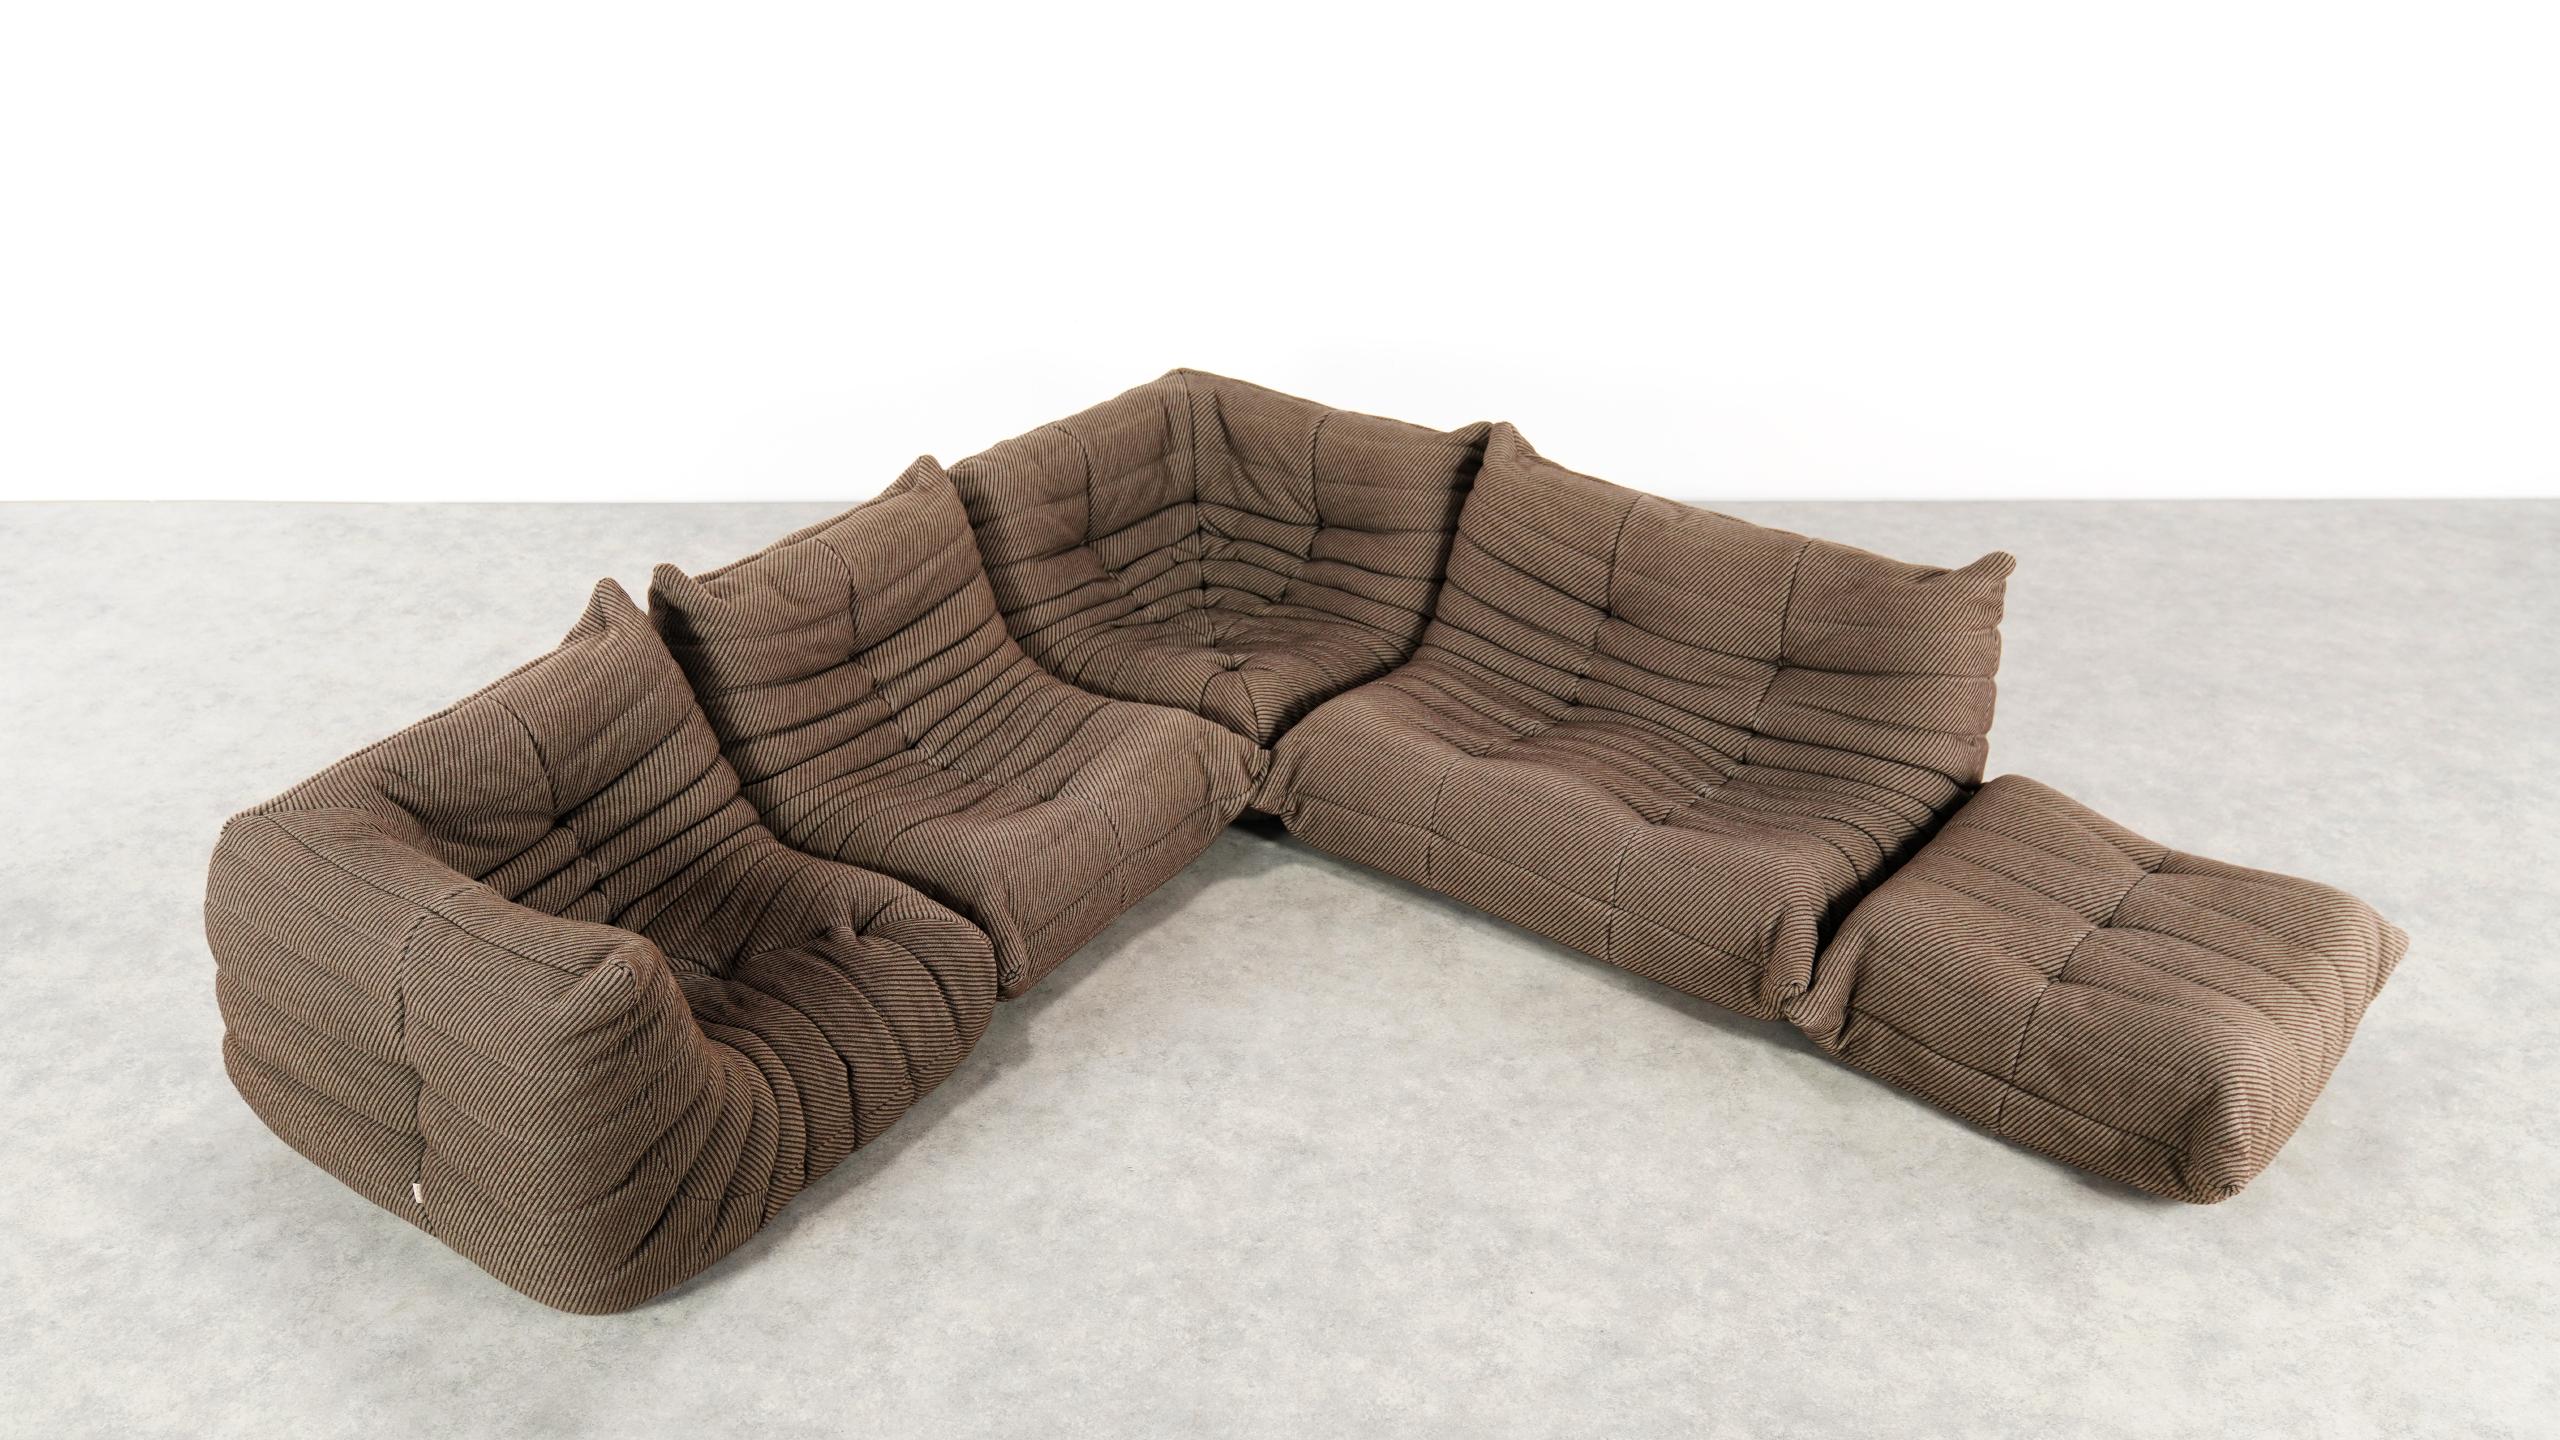 Space Age Togo Sofa / Livingroom Seatgroup by Michel Ducaroy for Ligne Roset